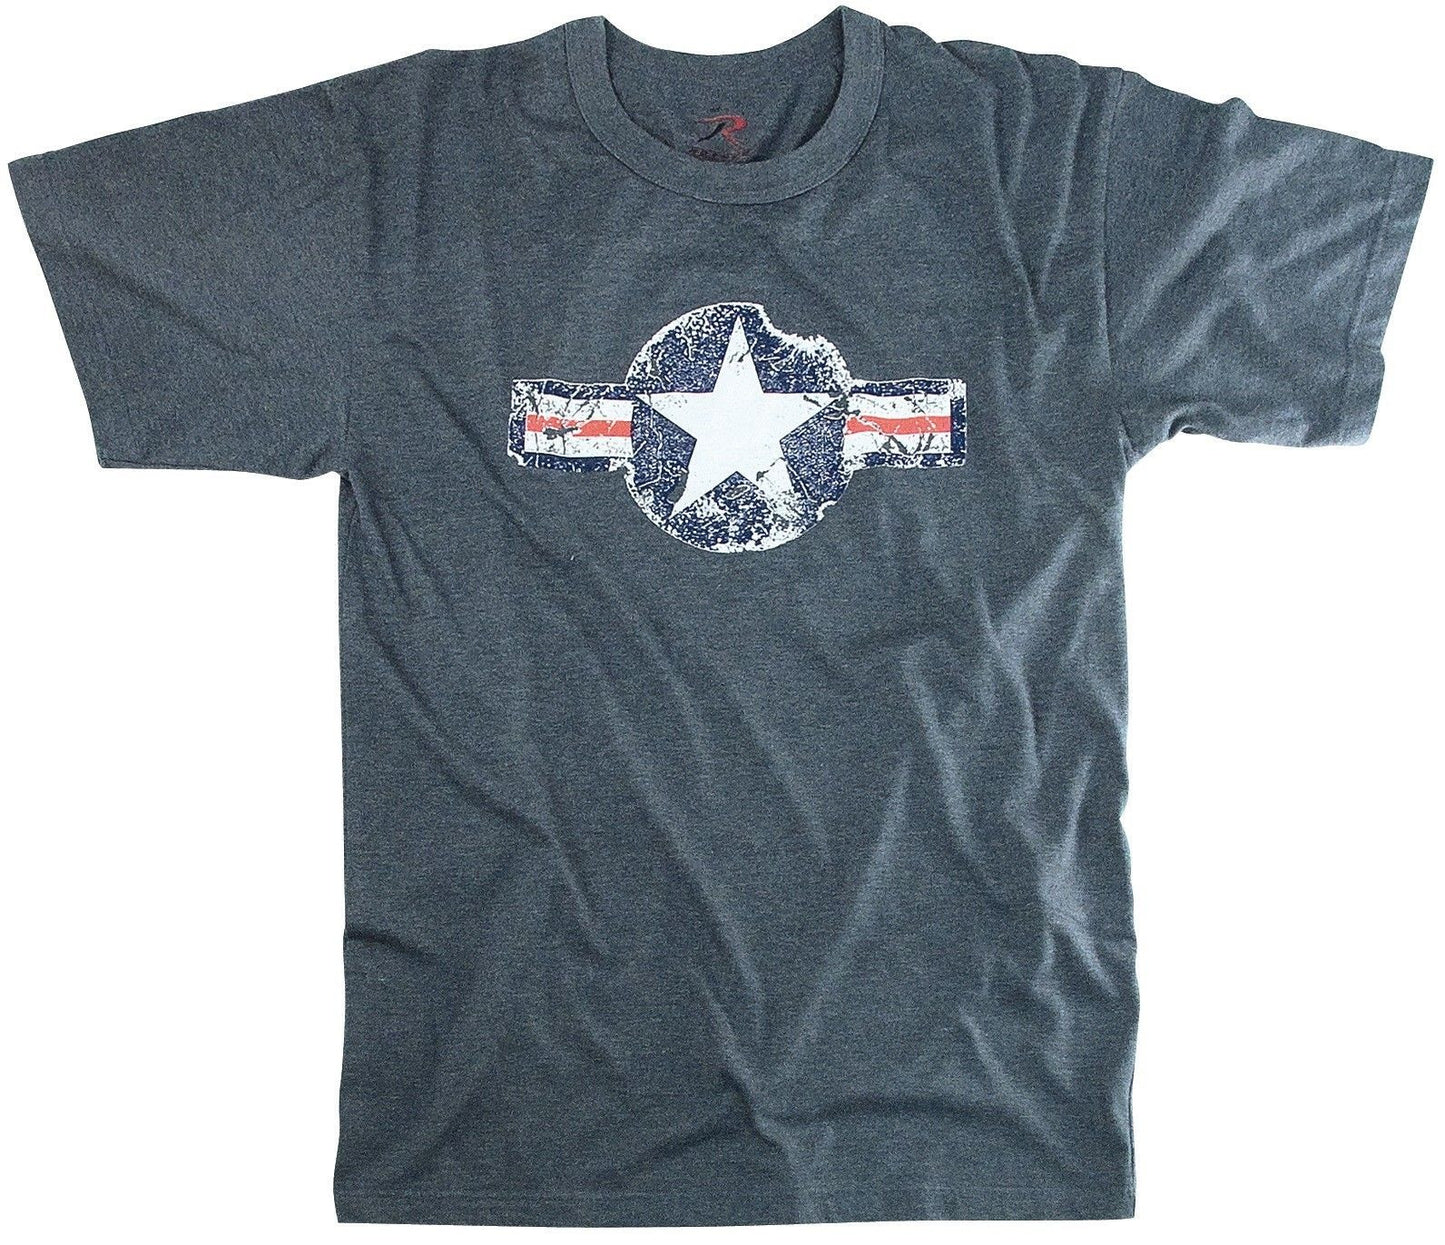 Vintage Army Air Corp Retro Blue T-Shirt Tee Shirt